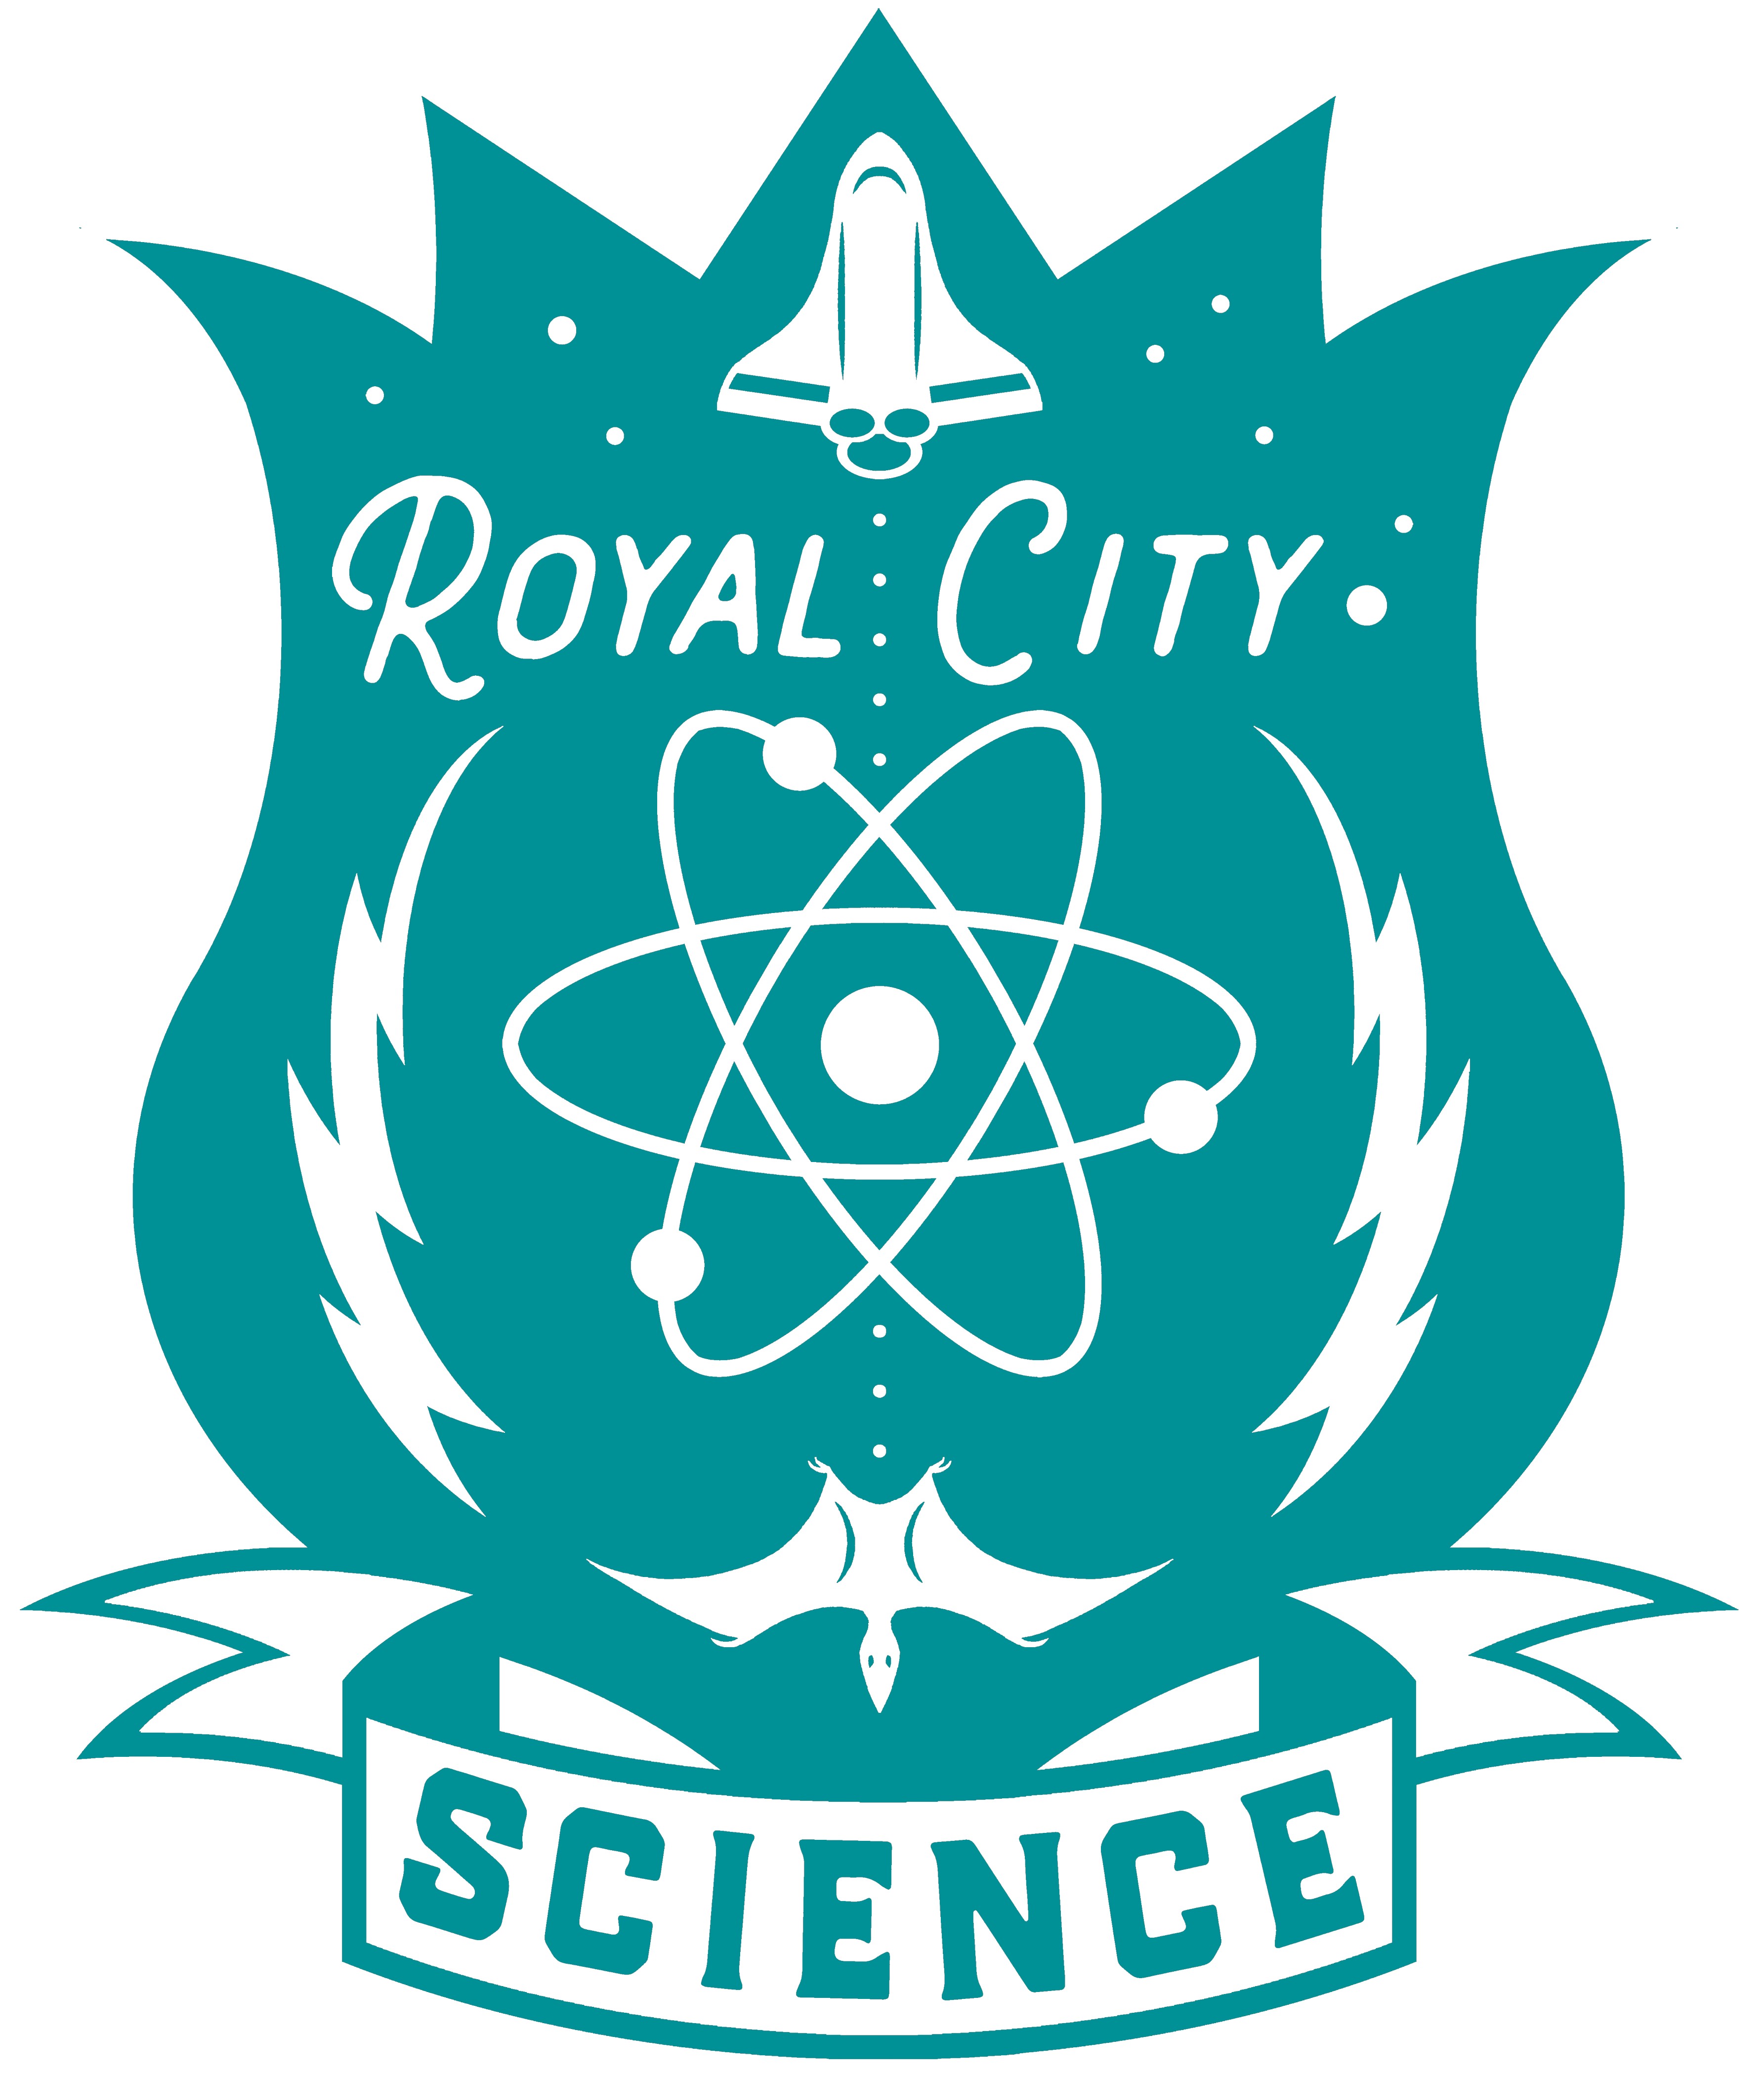 Royal City Science logo